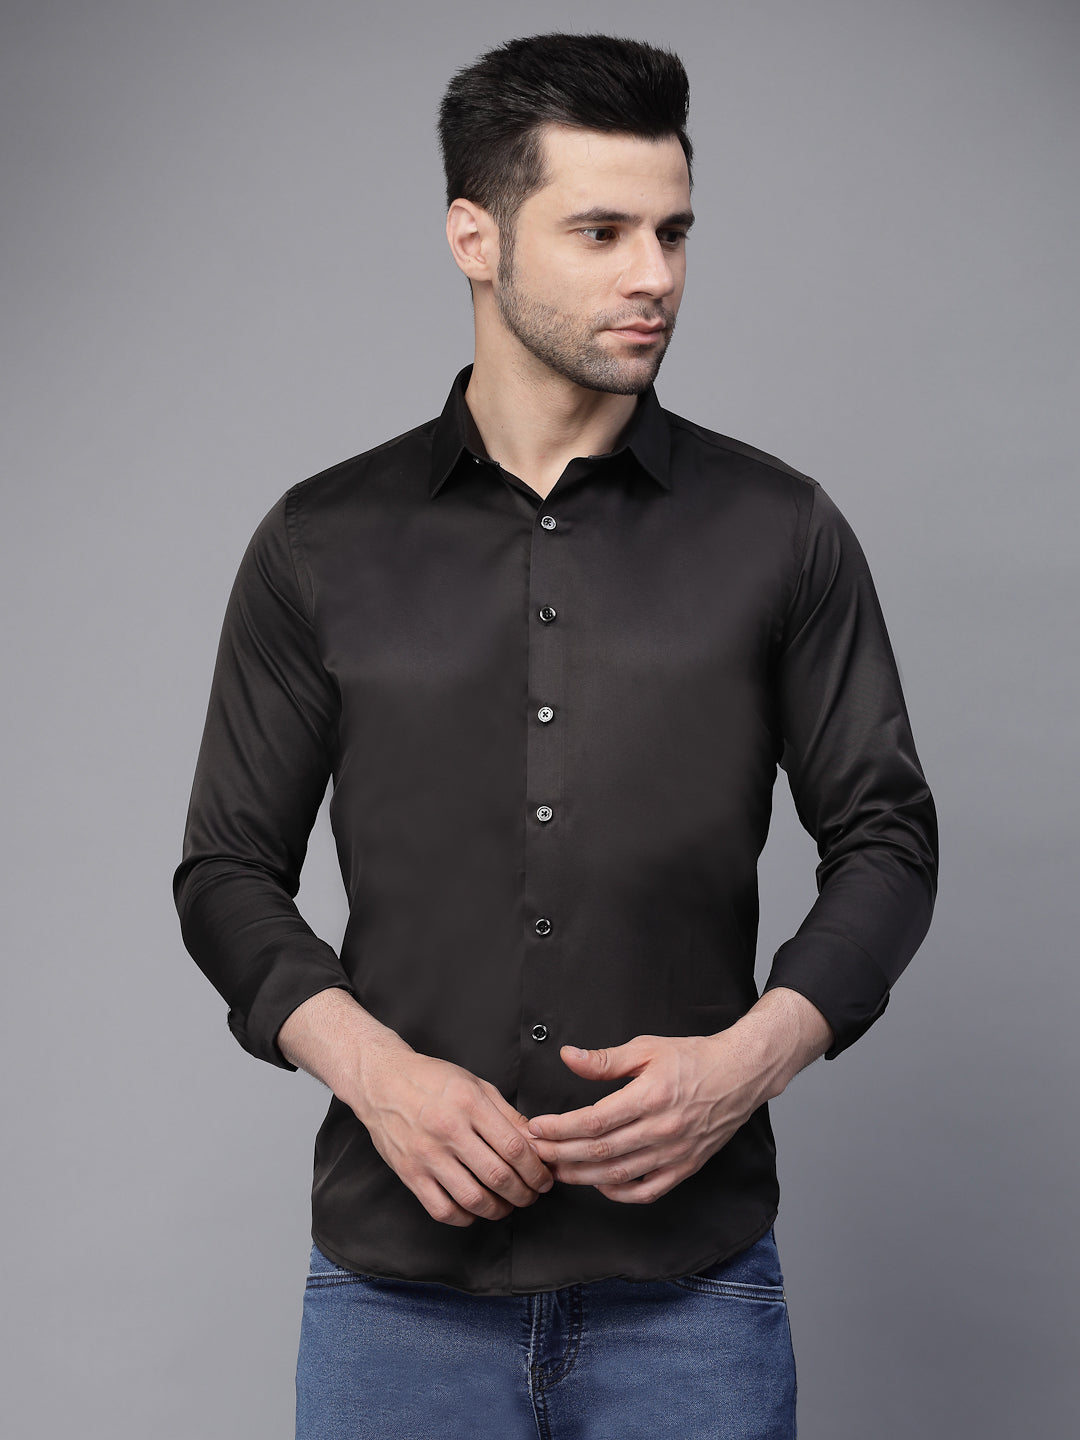 Mens Black Full Sleeve Plain Casual Shirt